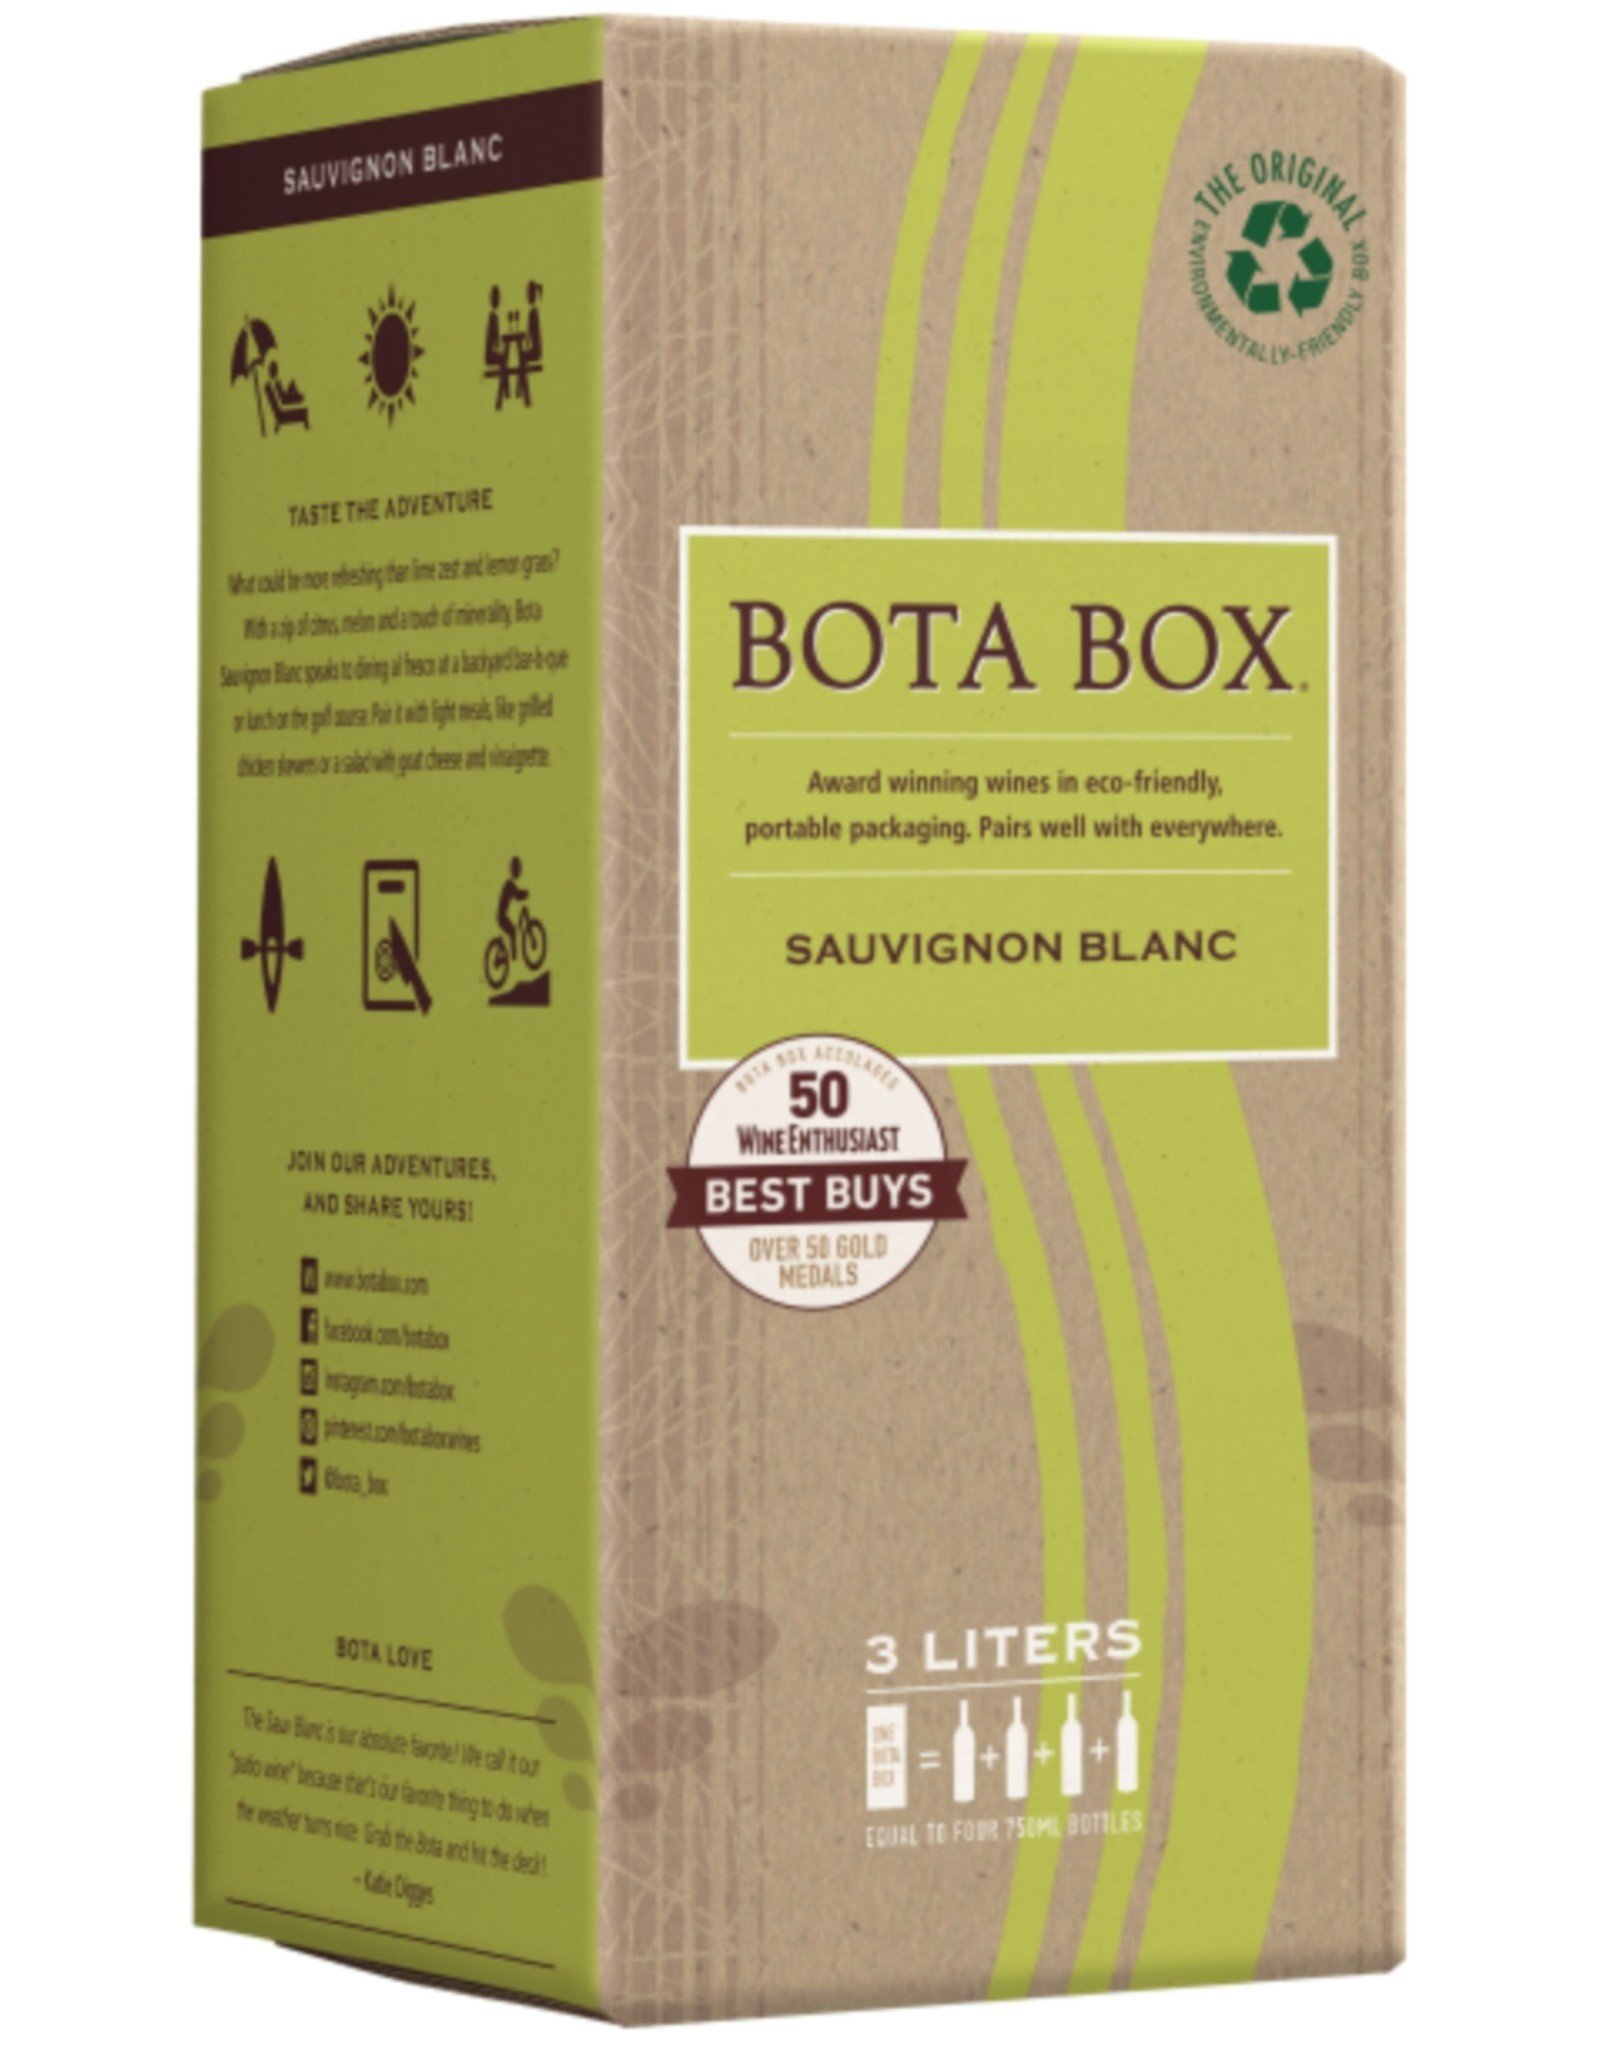 Bota Box Bota Box - Sauvignon Blanc - Box - 3L